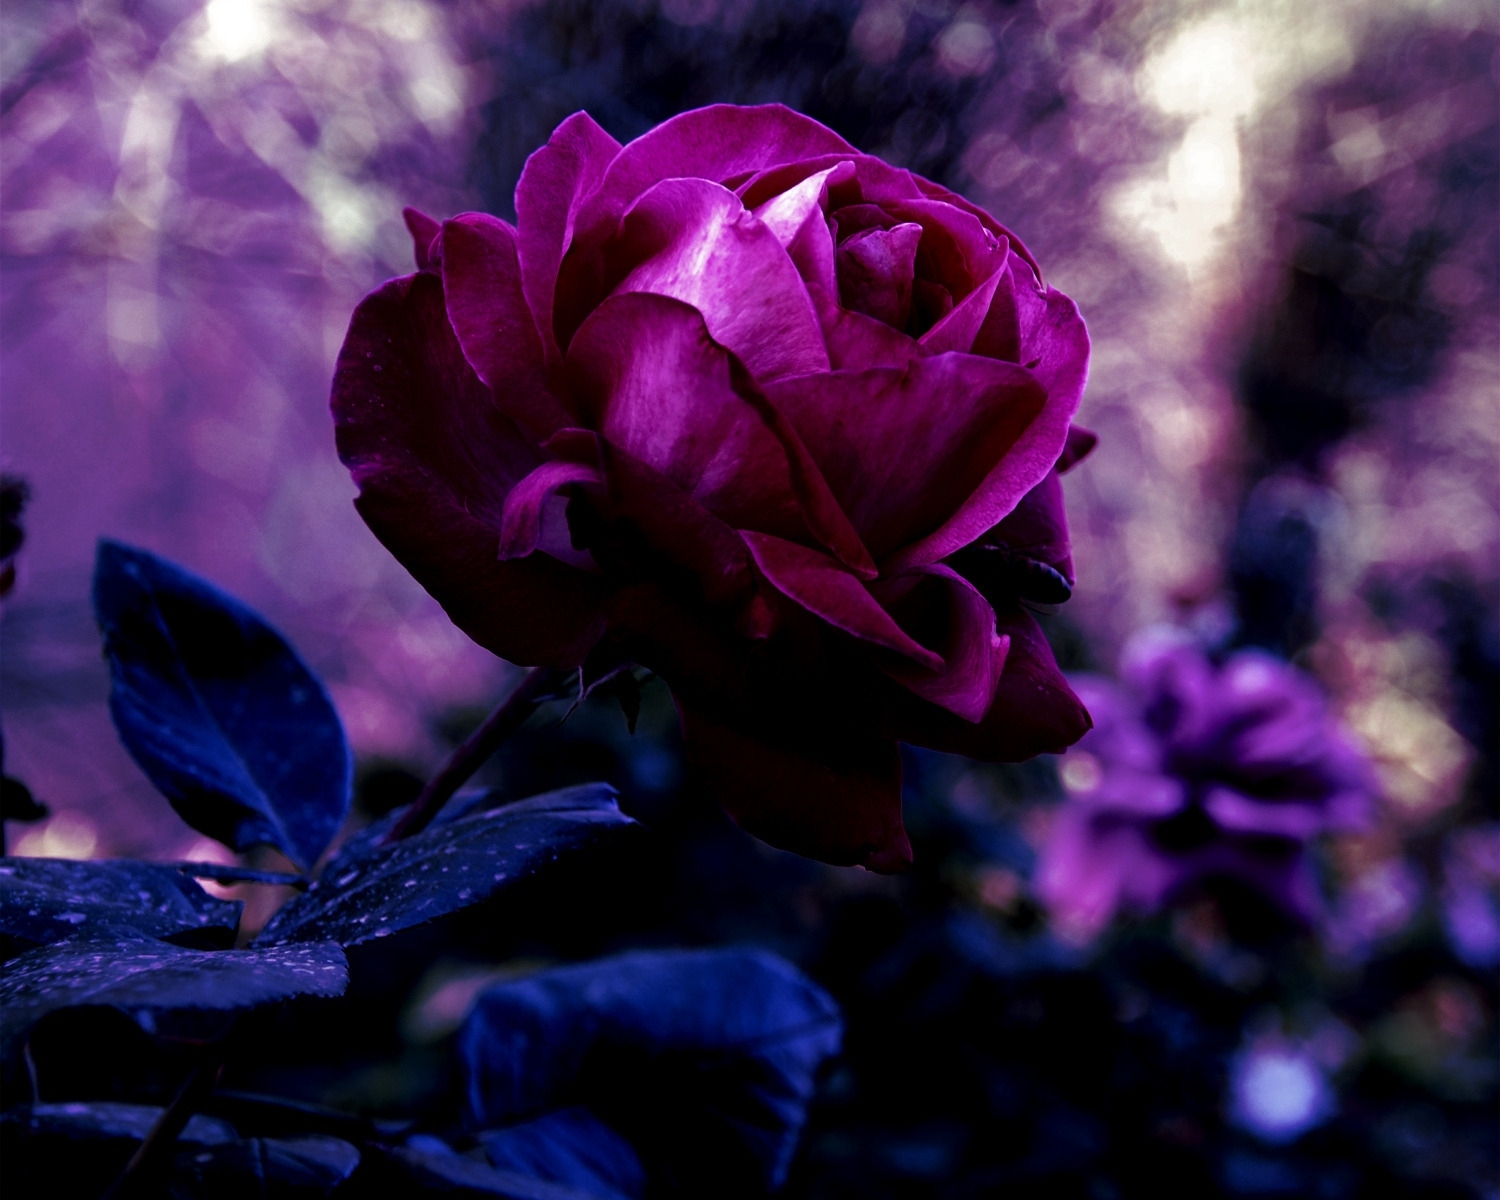 rose flower, flowers, drops, rose, bud, blur, smooth, evening